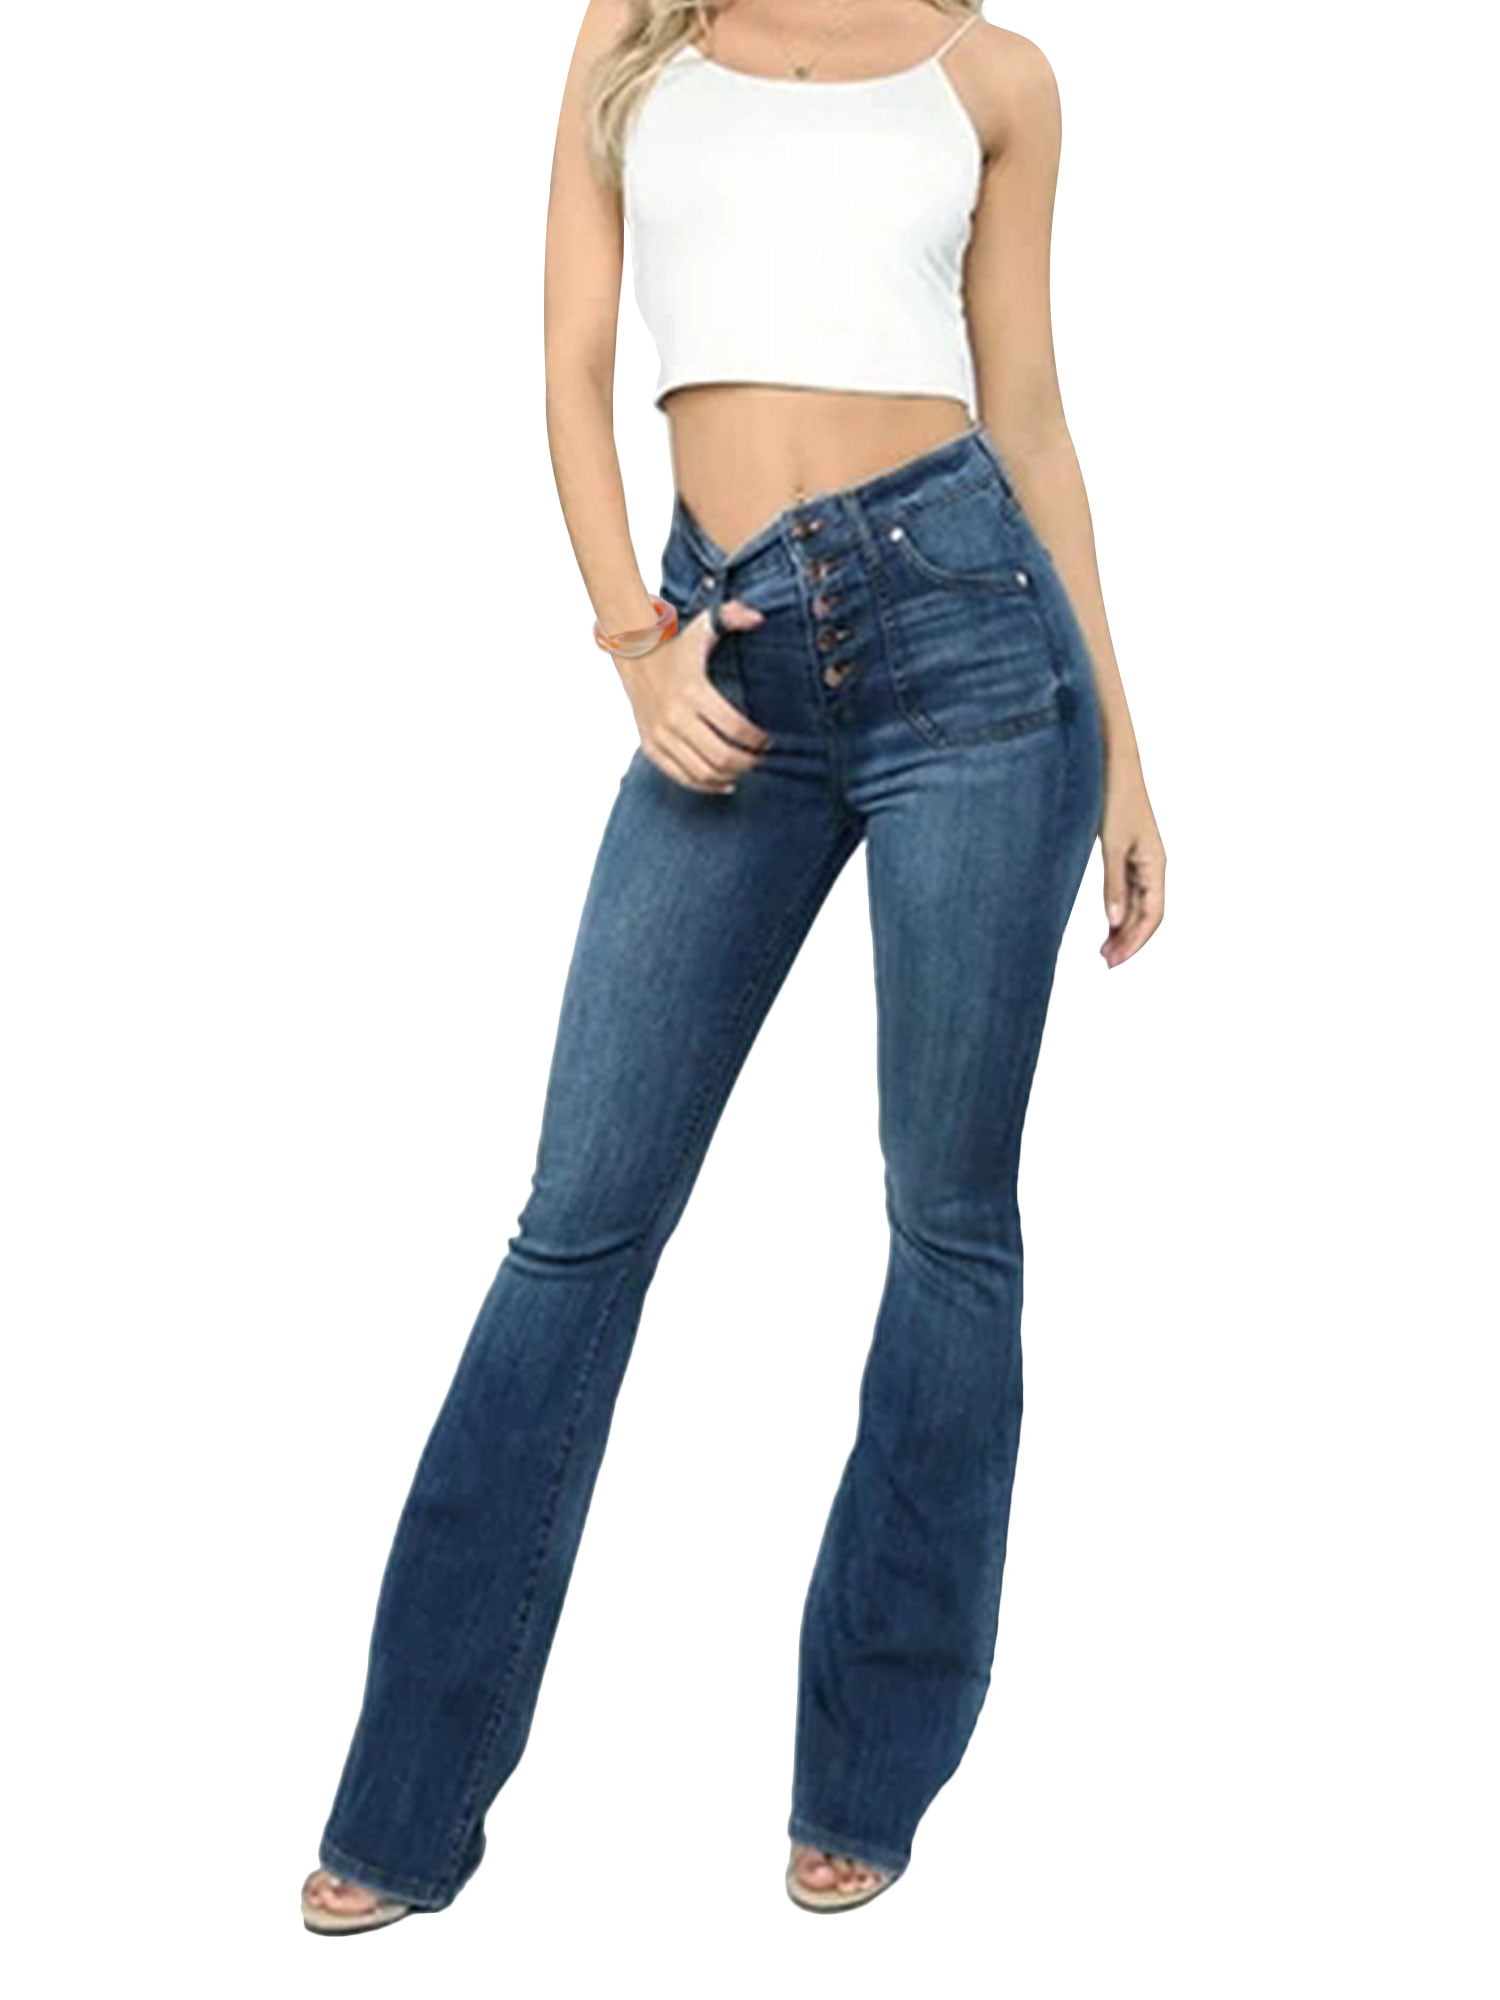 HiMONE - Women High Waist Denim Jeans Pants Casual Classic Boot Cut ...